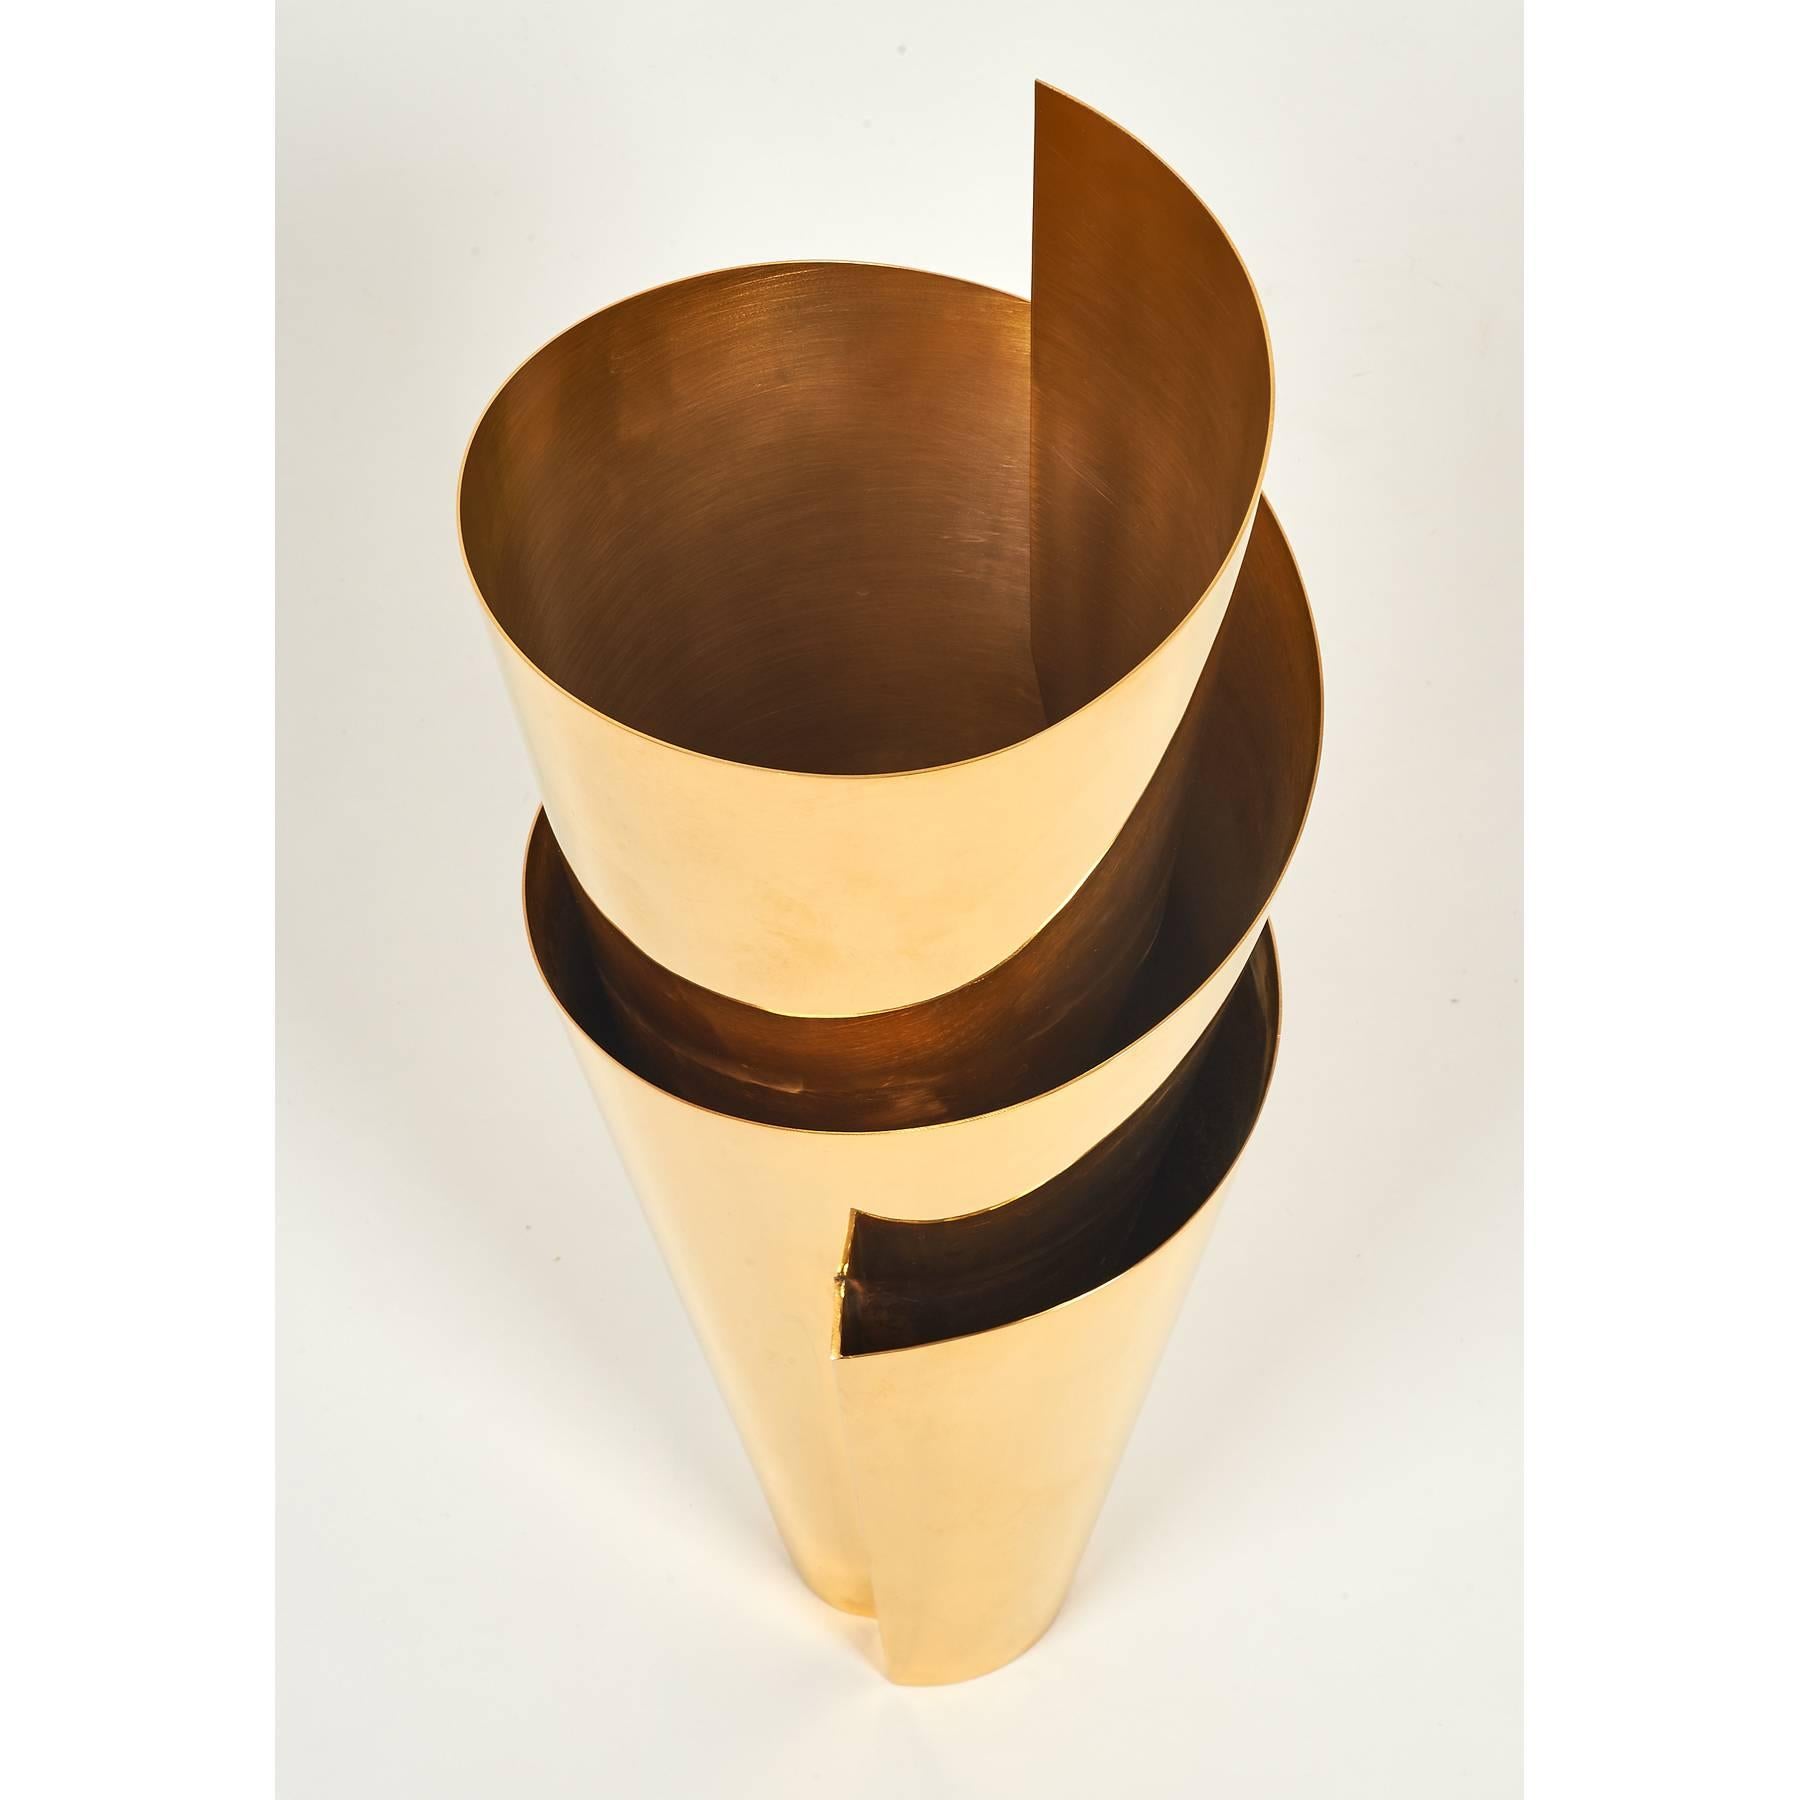 Italian Tall Spiral Vase by Stefano Casciani, 2014